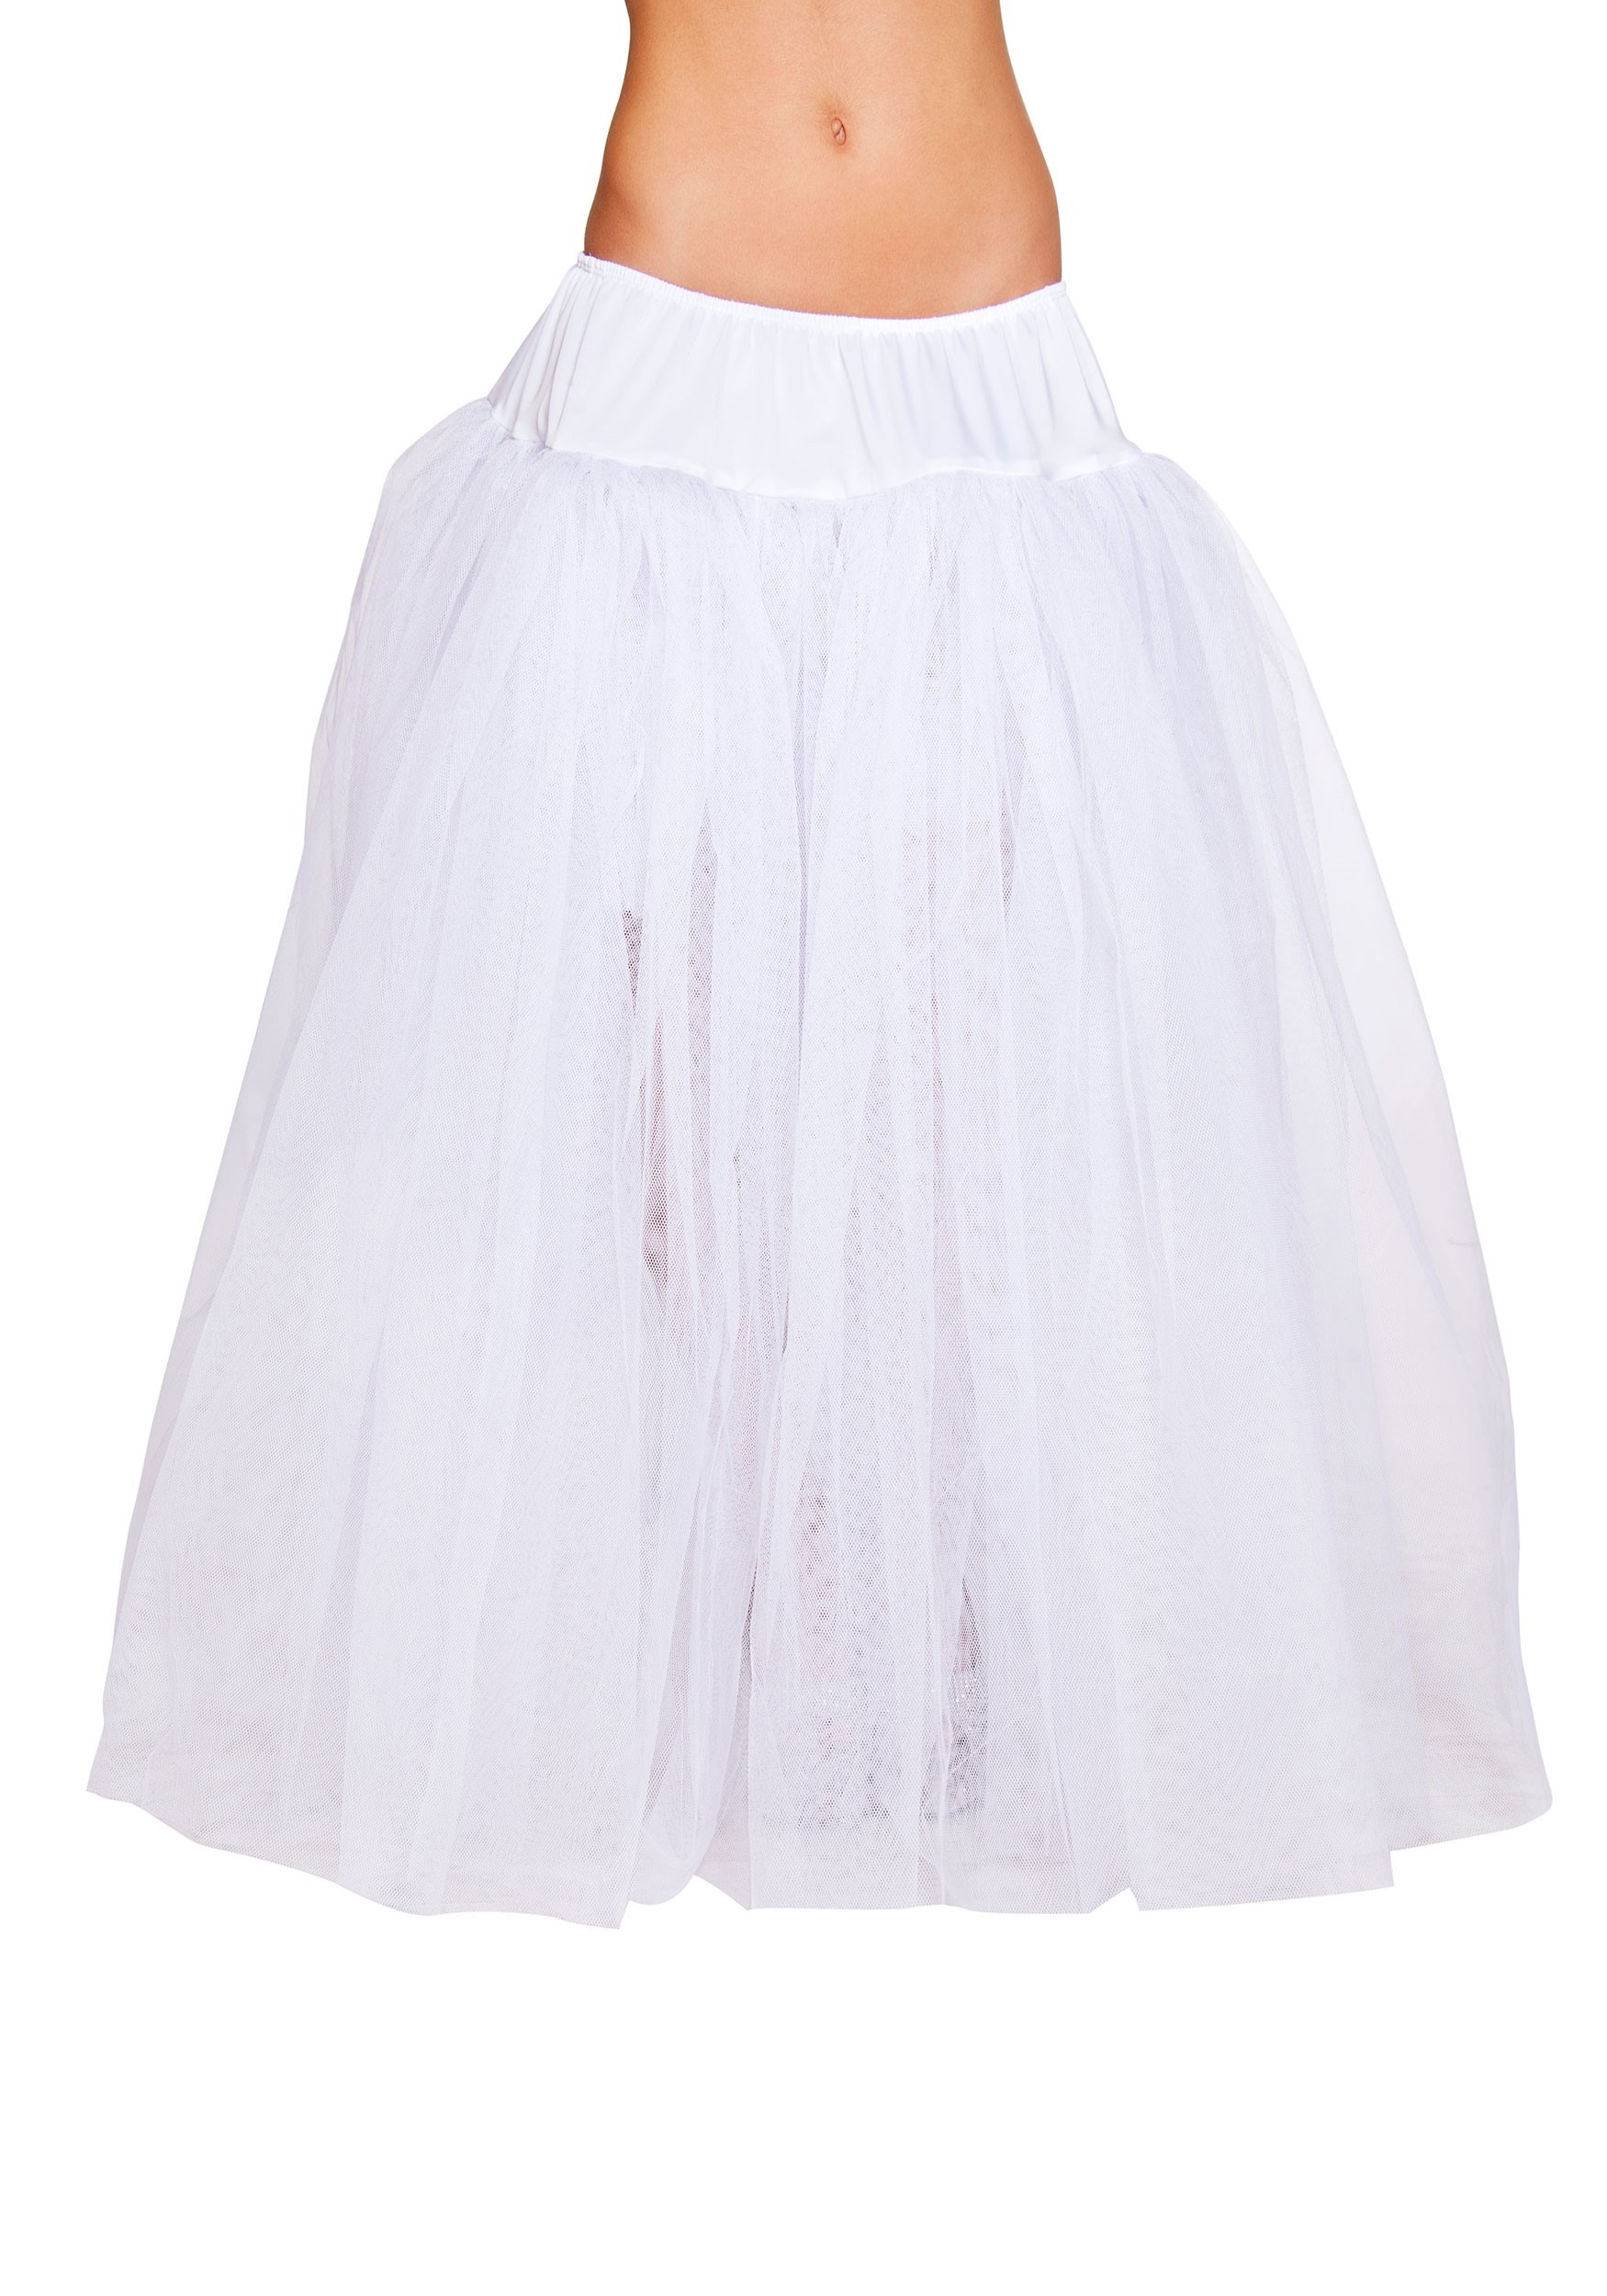 White Long Petticoat Accessory